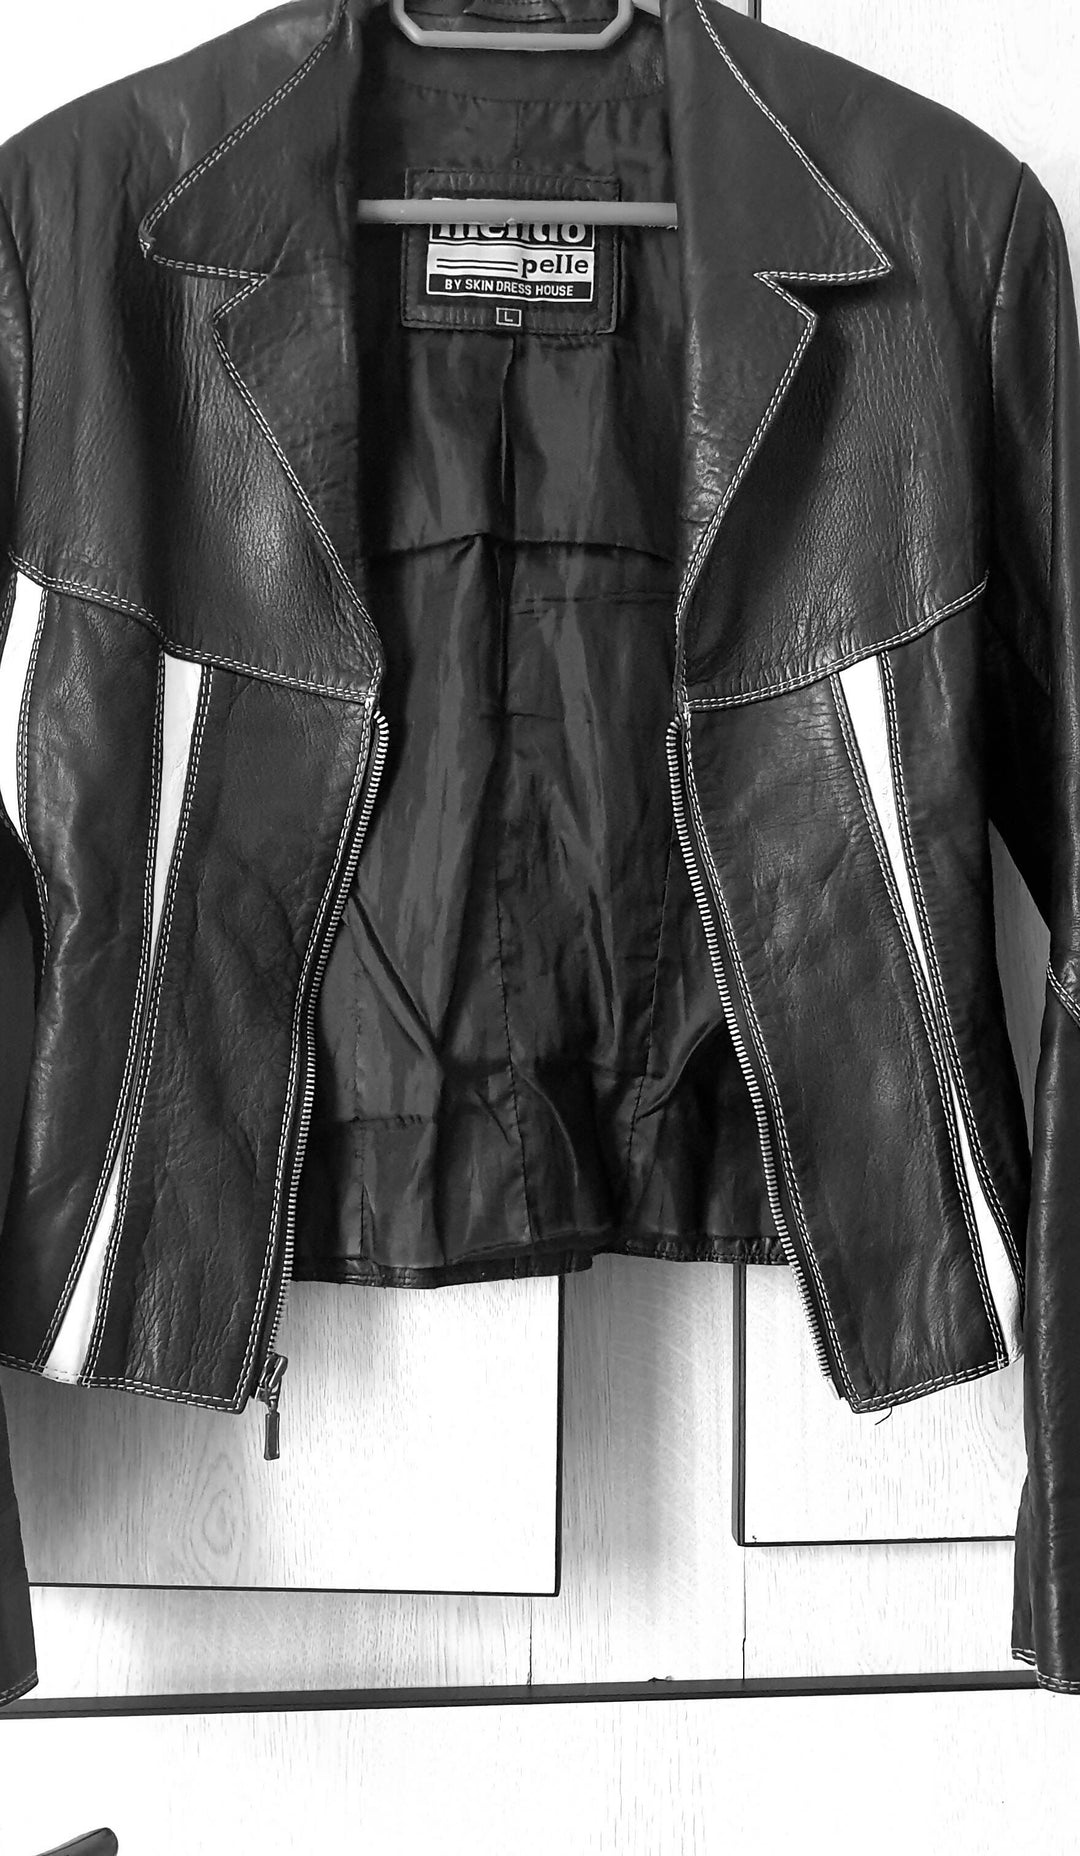 Image of Mendo Pelle Genuine Leather Jacket